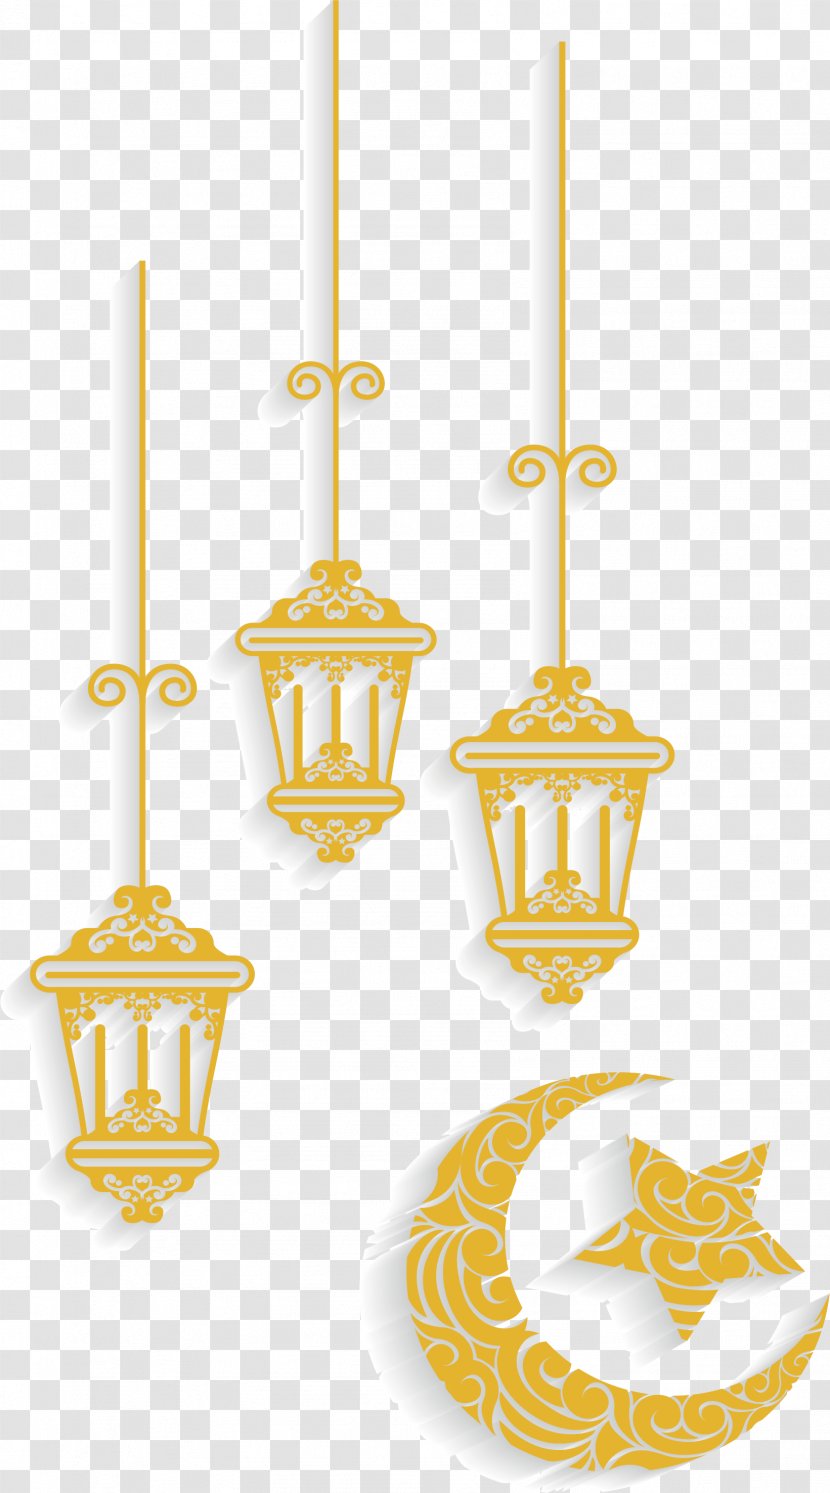 Islamic Geometric Patterns Ornament - Islam Ornaments Transparent PNG